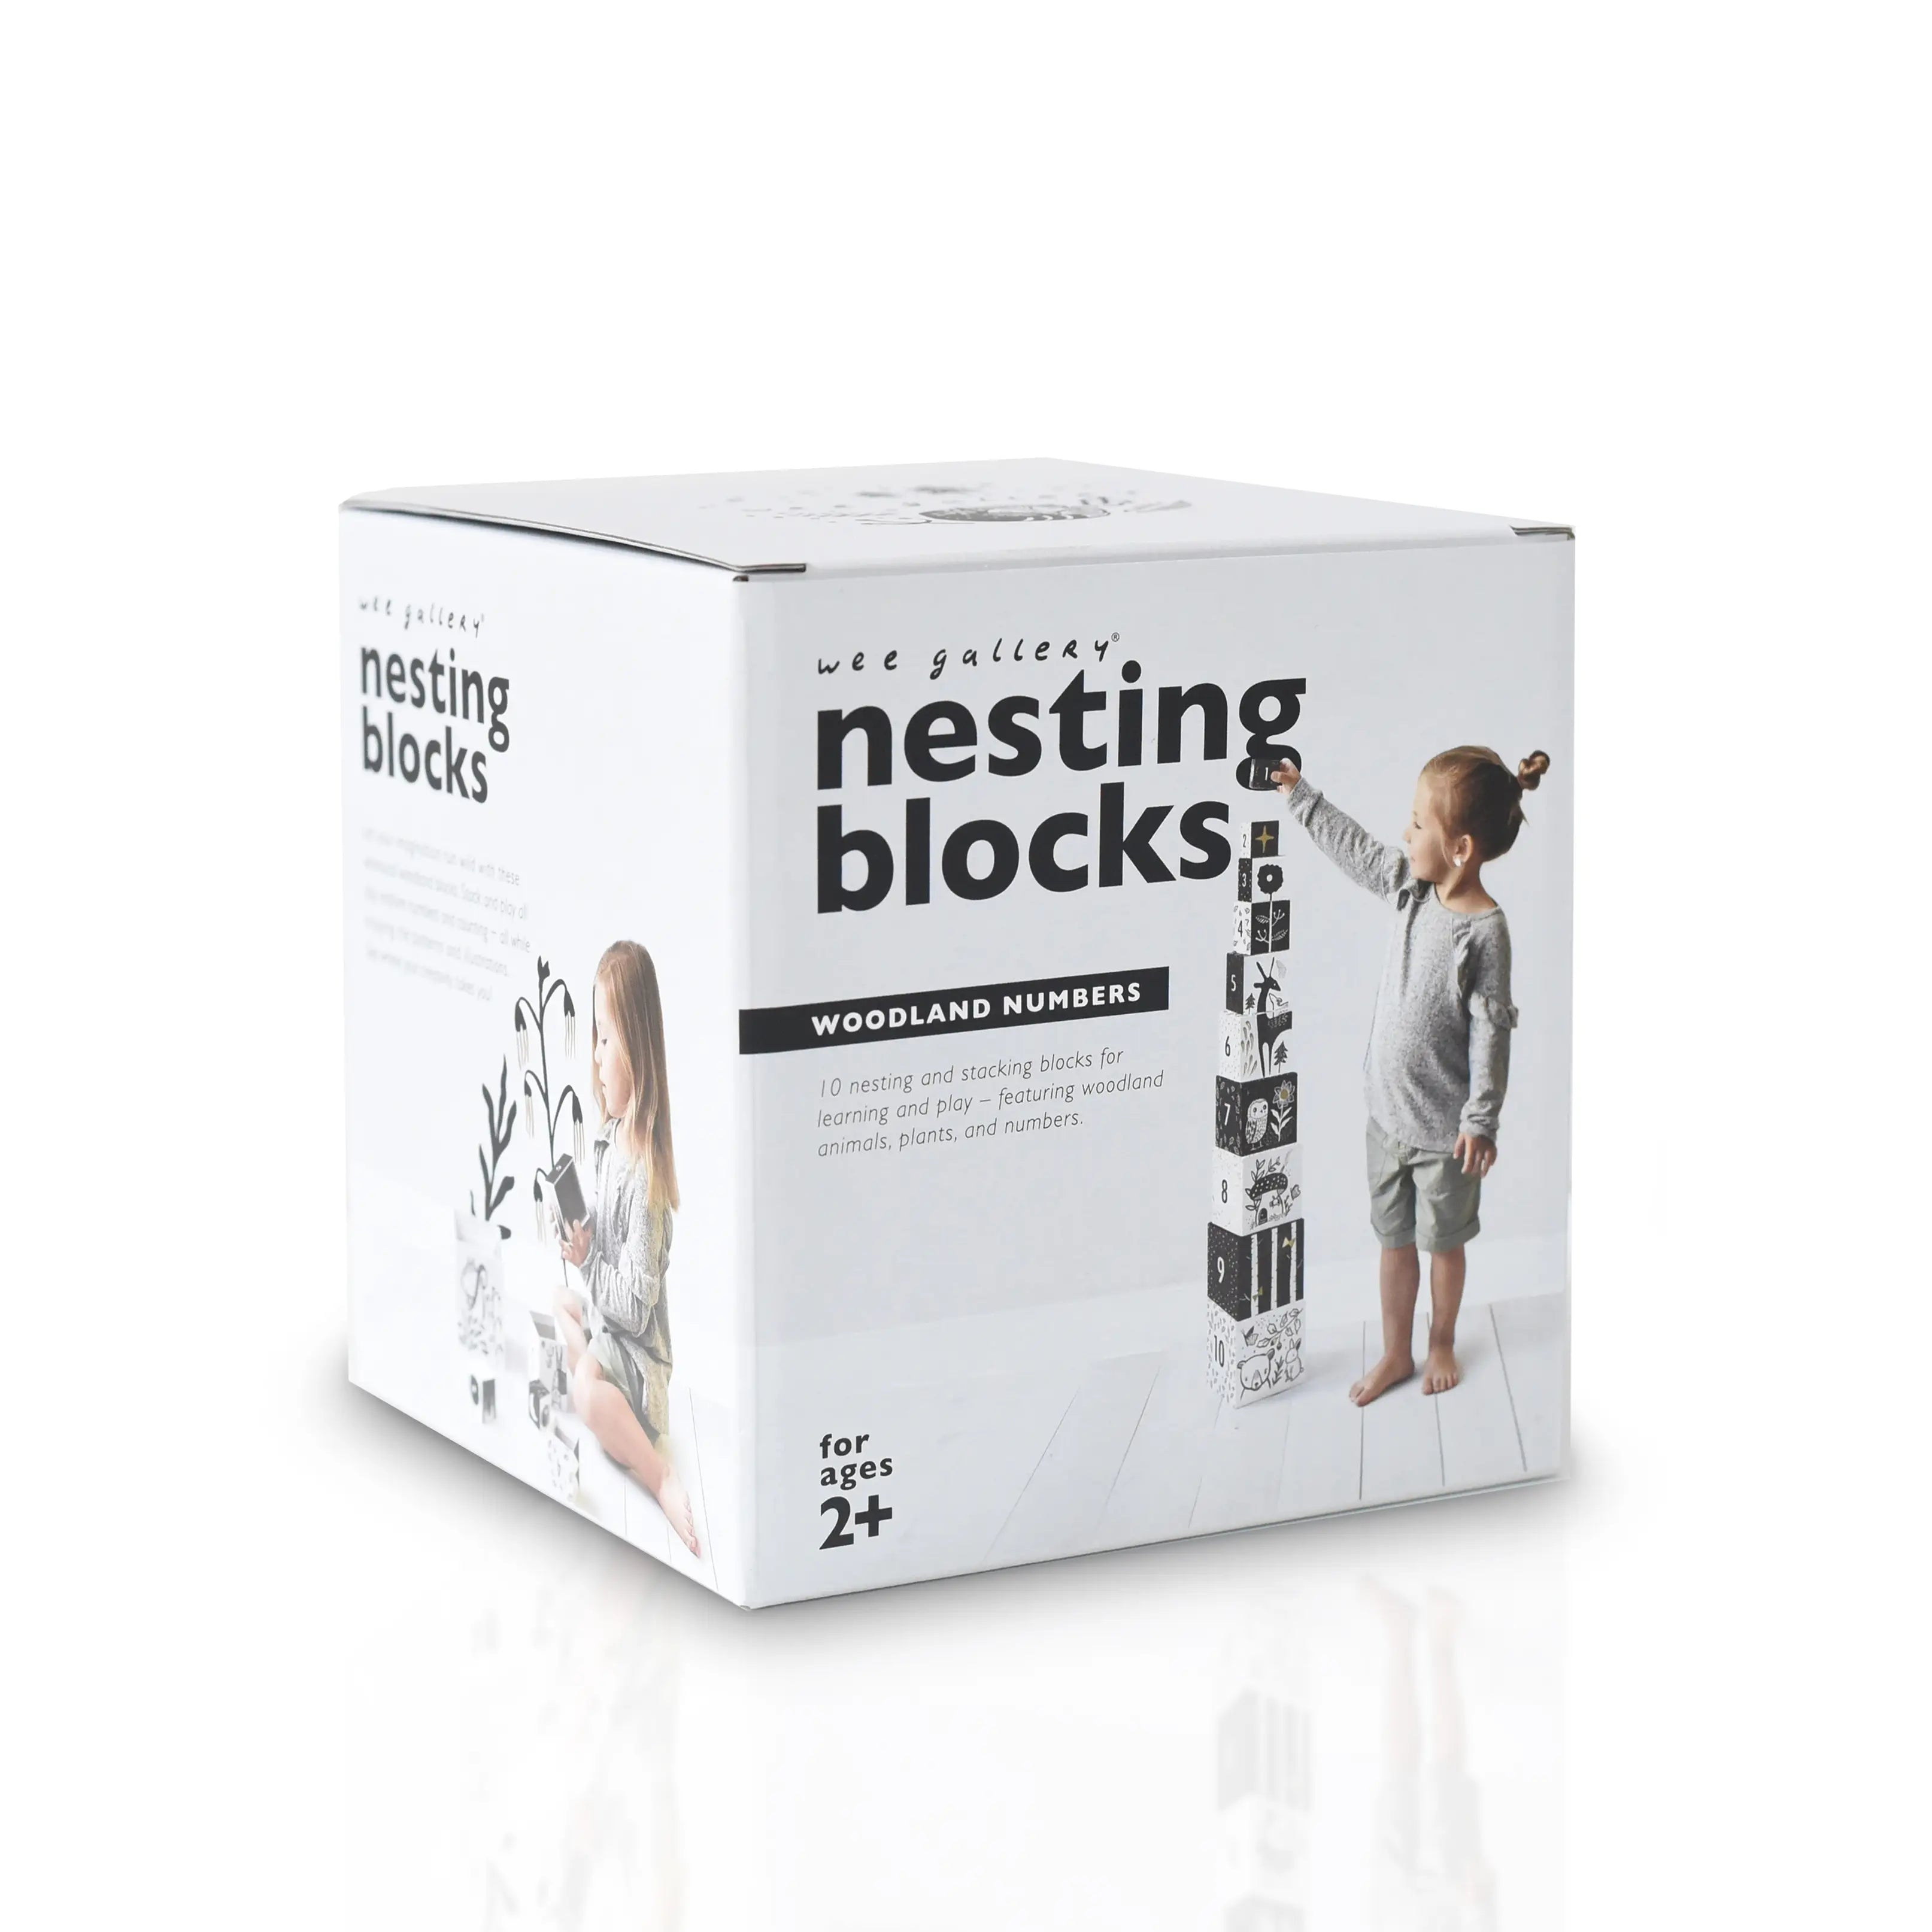 2+ nesting blocks